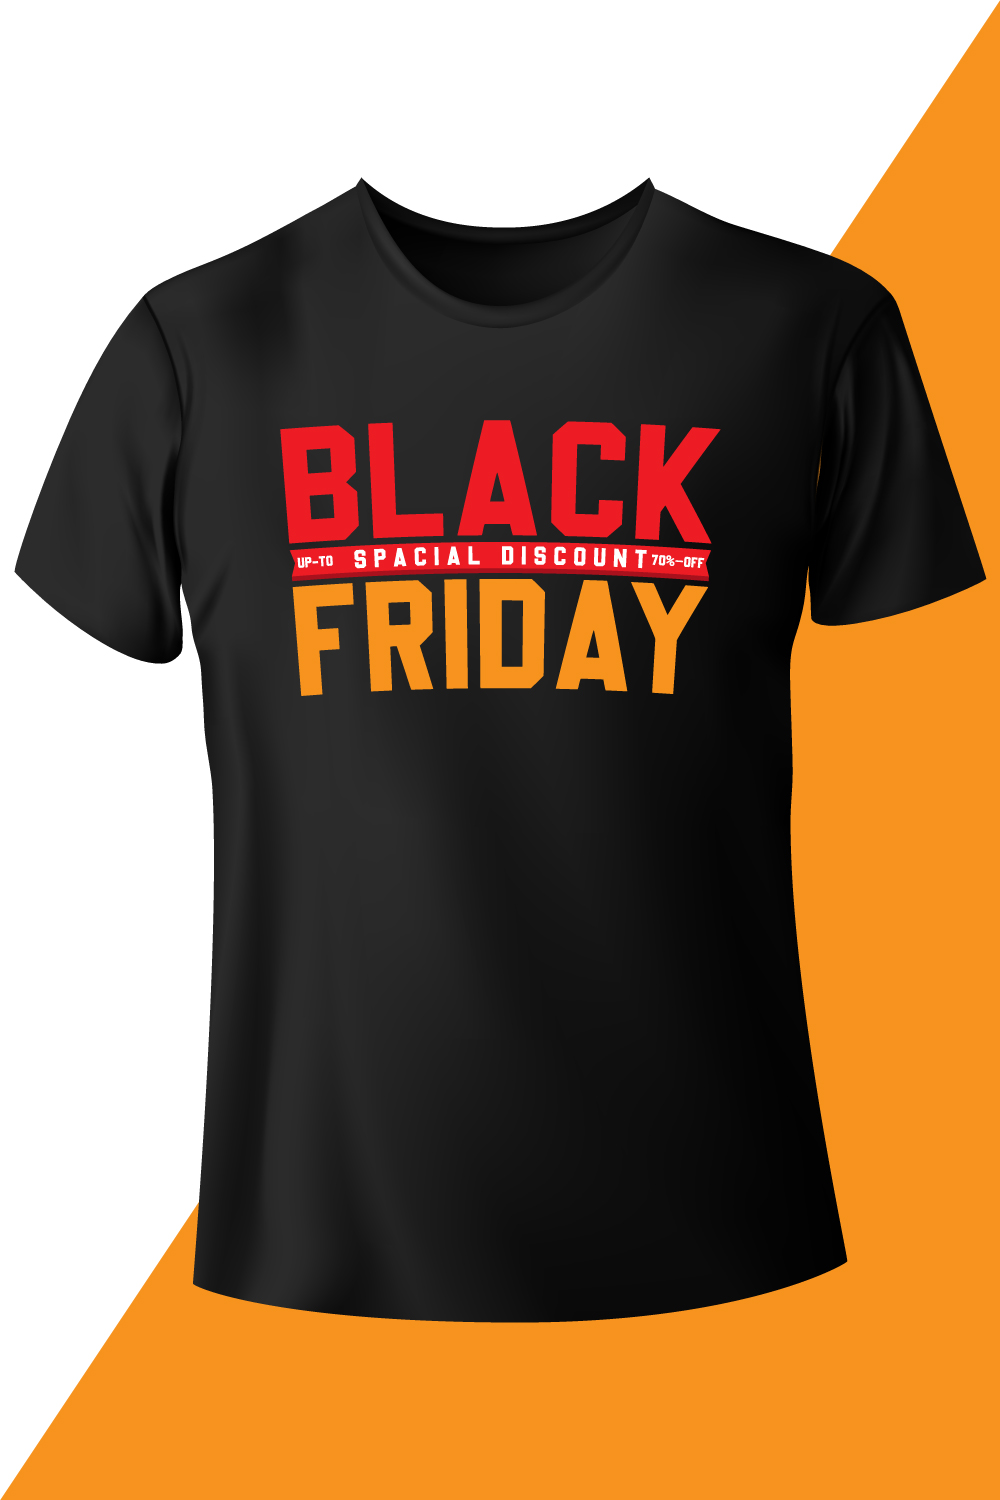 Image of a black t-shirt with a unique inscription Black Friday.